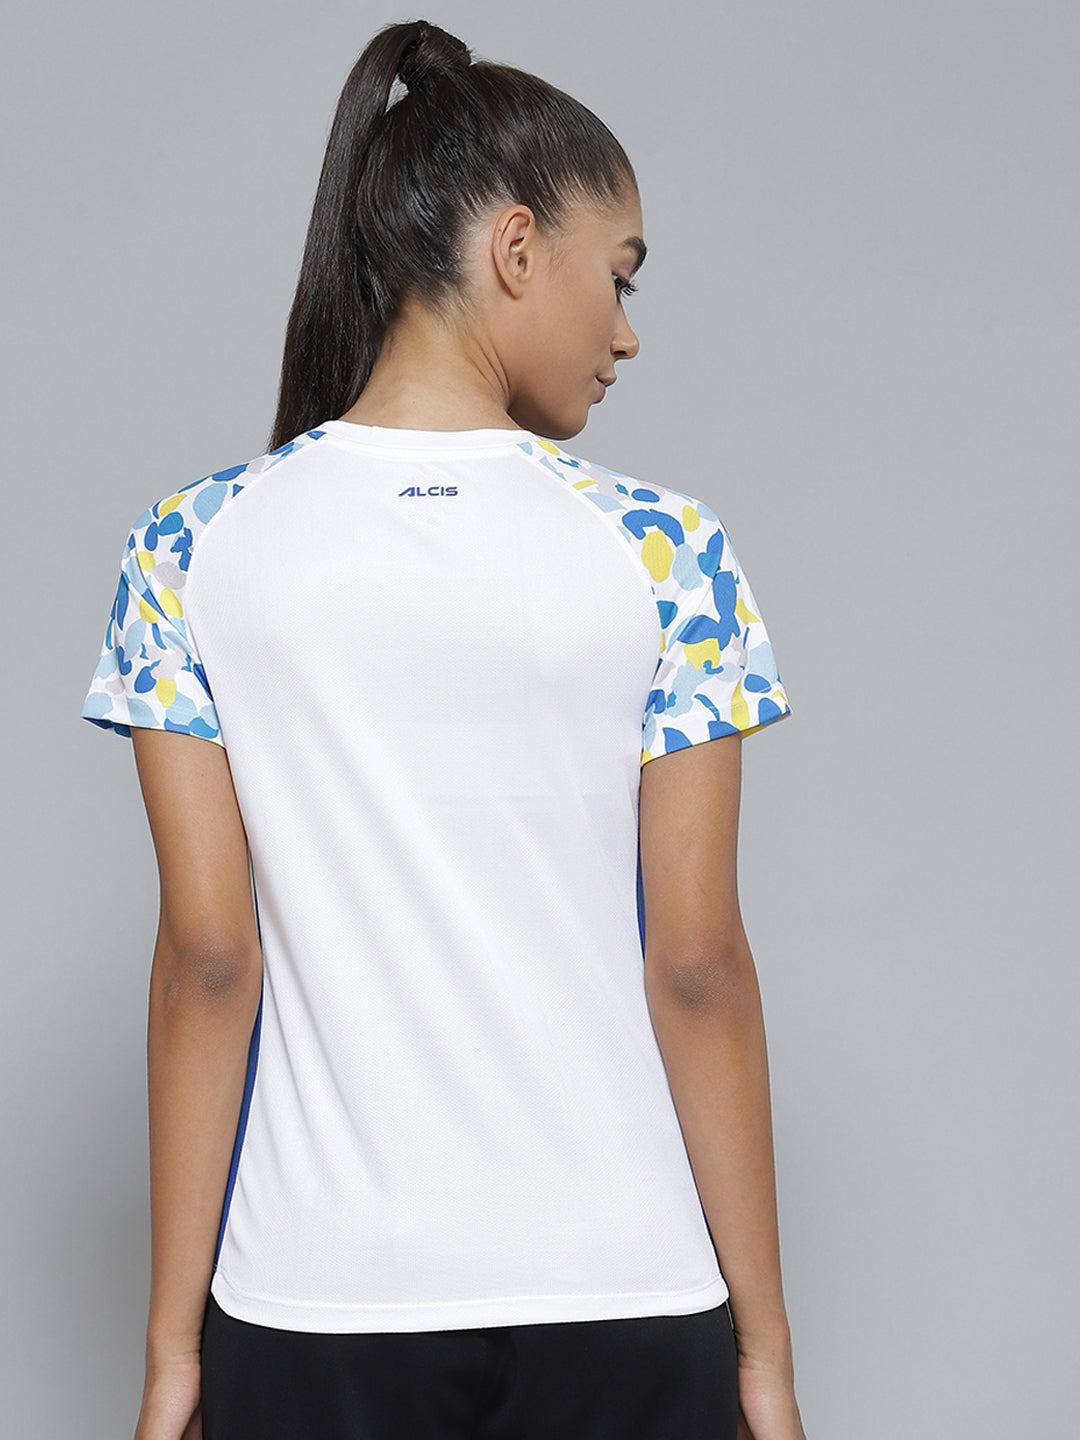 Alcis Women White  Blue Printed Slim Fit Sports T-shirt